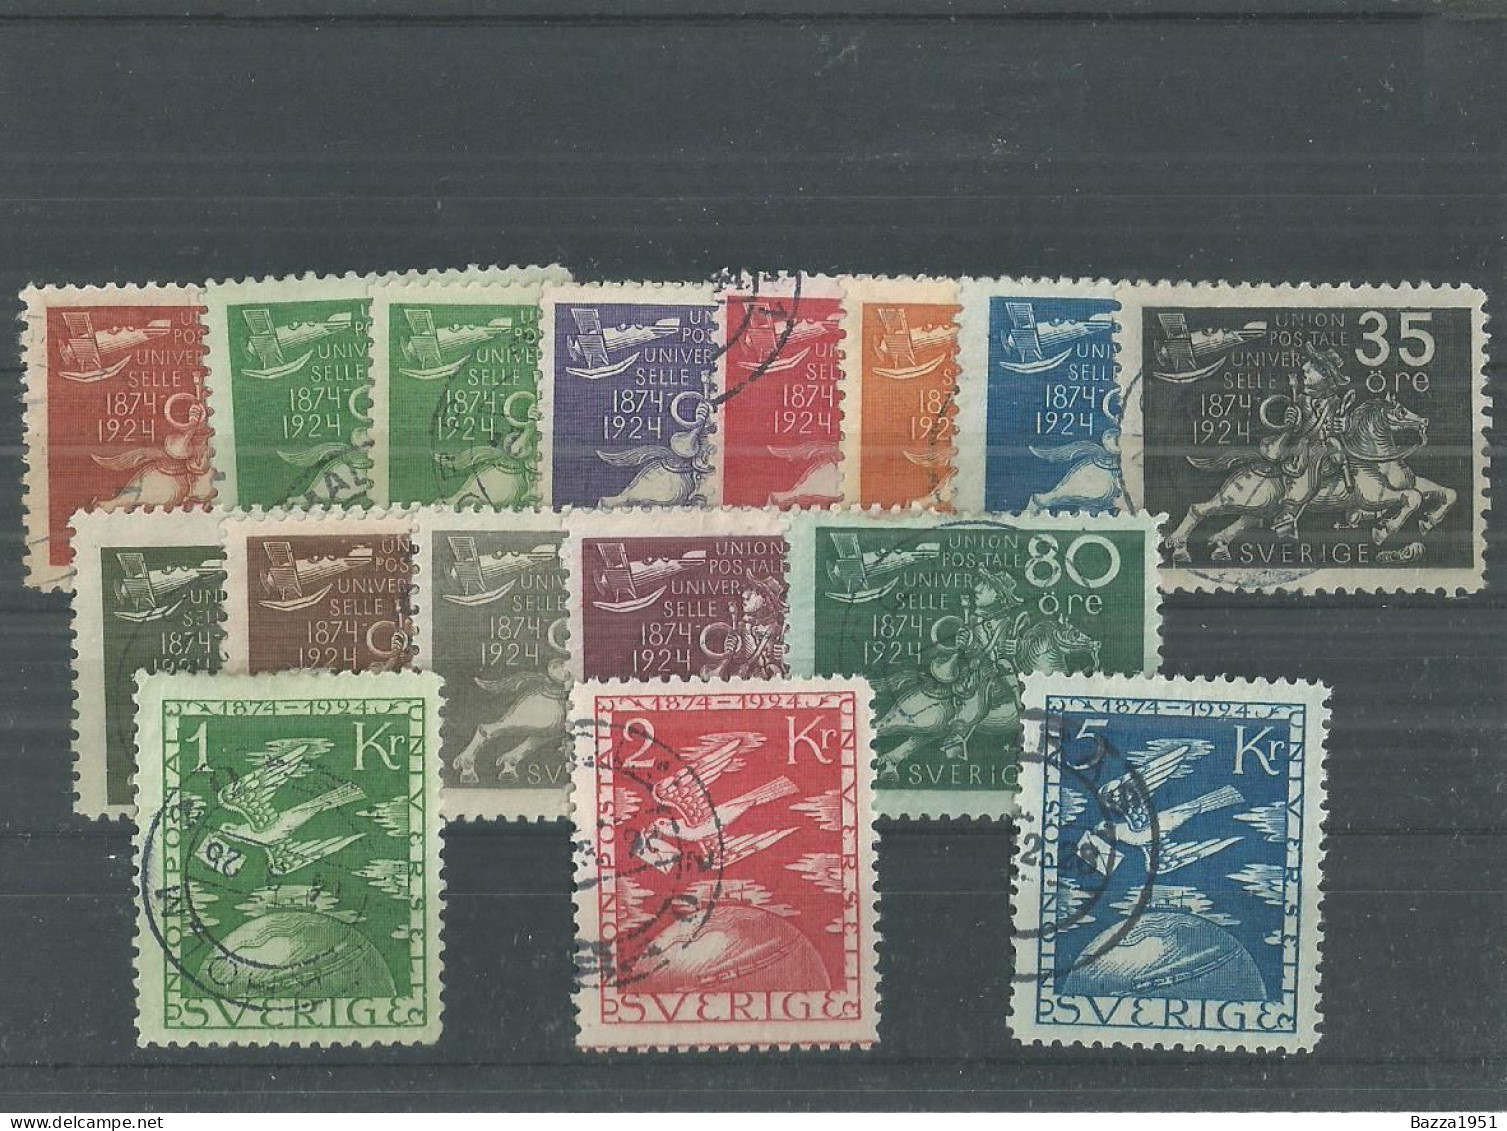 SWEDEN 1924 UPU SET COMPLETE FINE USED - Used Stamps